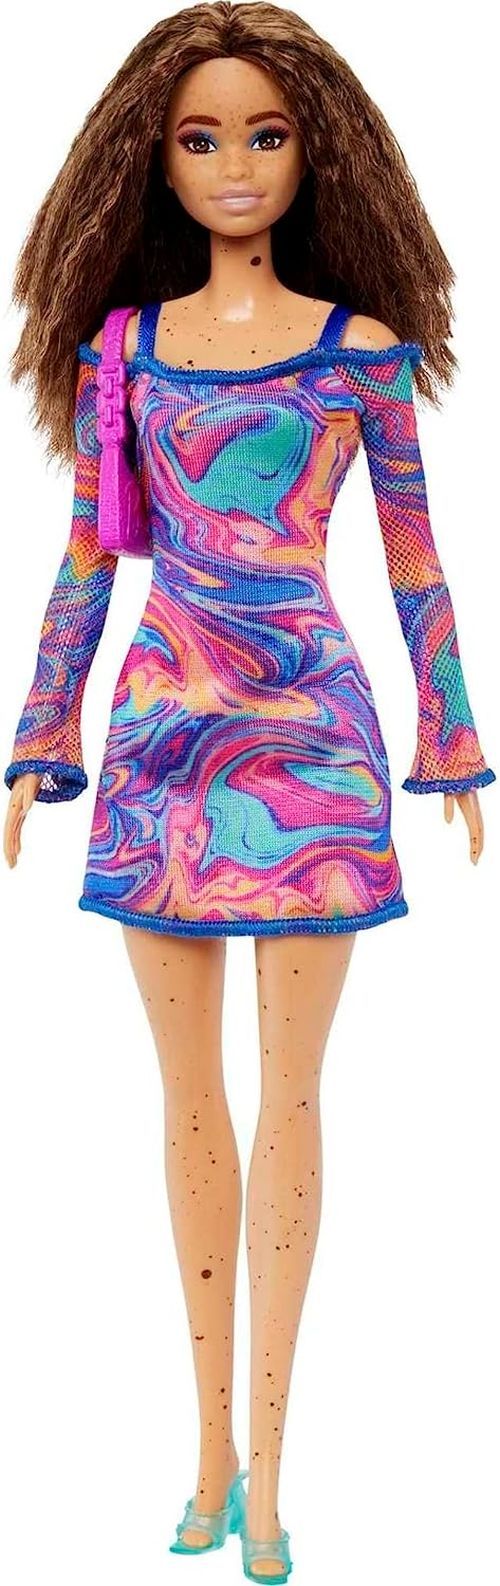 MATTEL Barbie In Swirled Color Dress - 